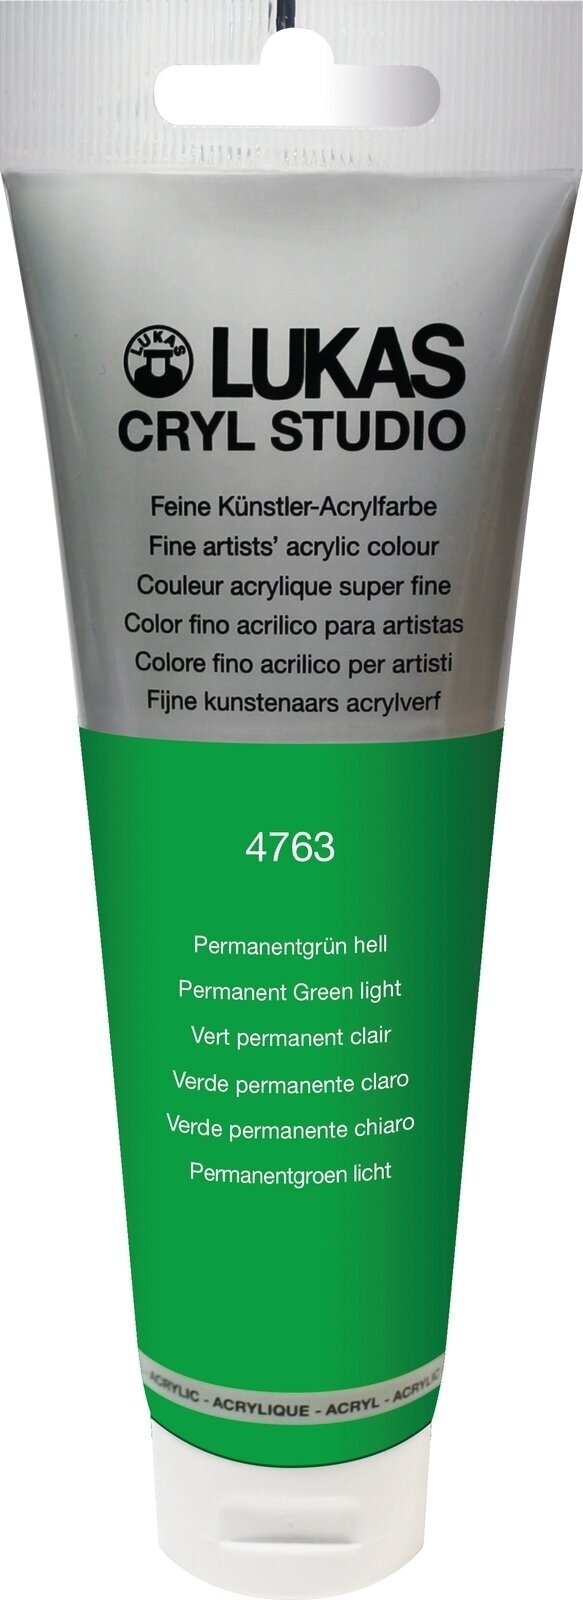 Akrylová farba Lukas Cryl Studio Acrylic Paint Plastic Tube Akrylová farba Permanent Green Light 125 ml 1 ks